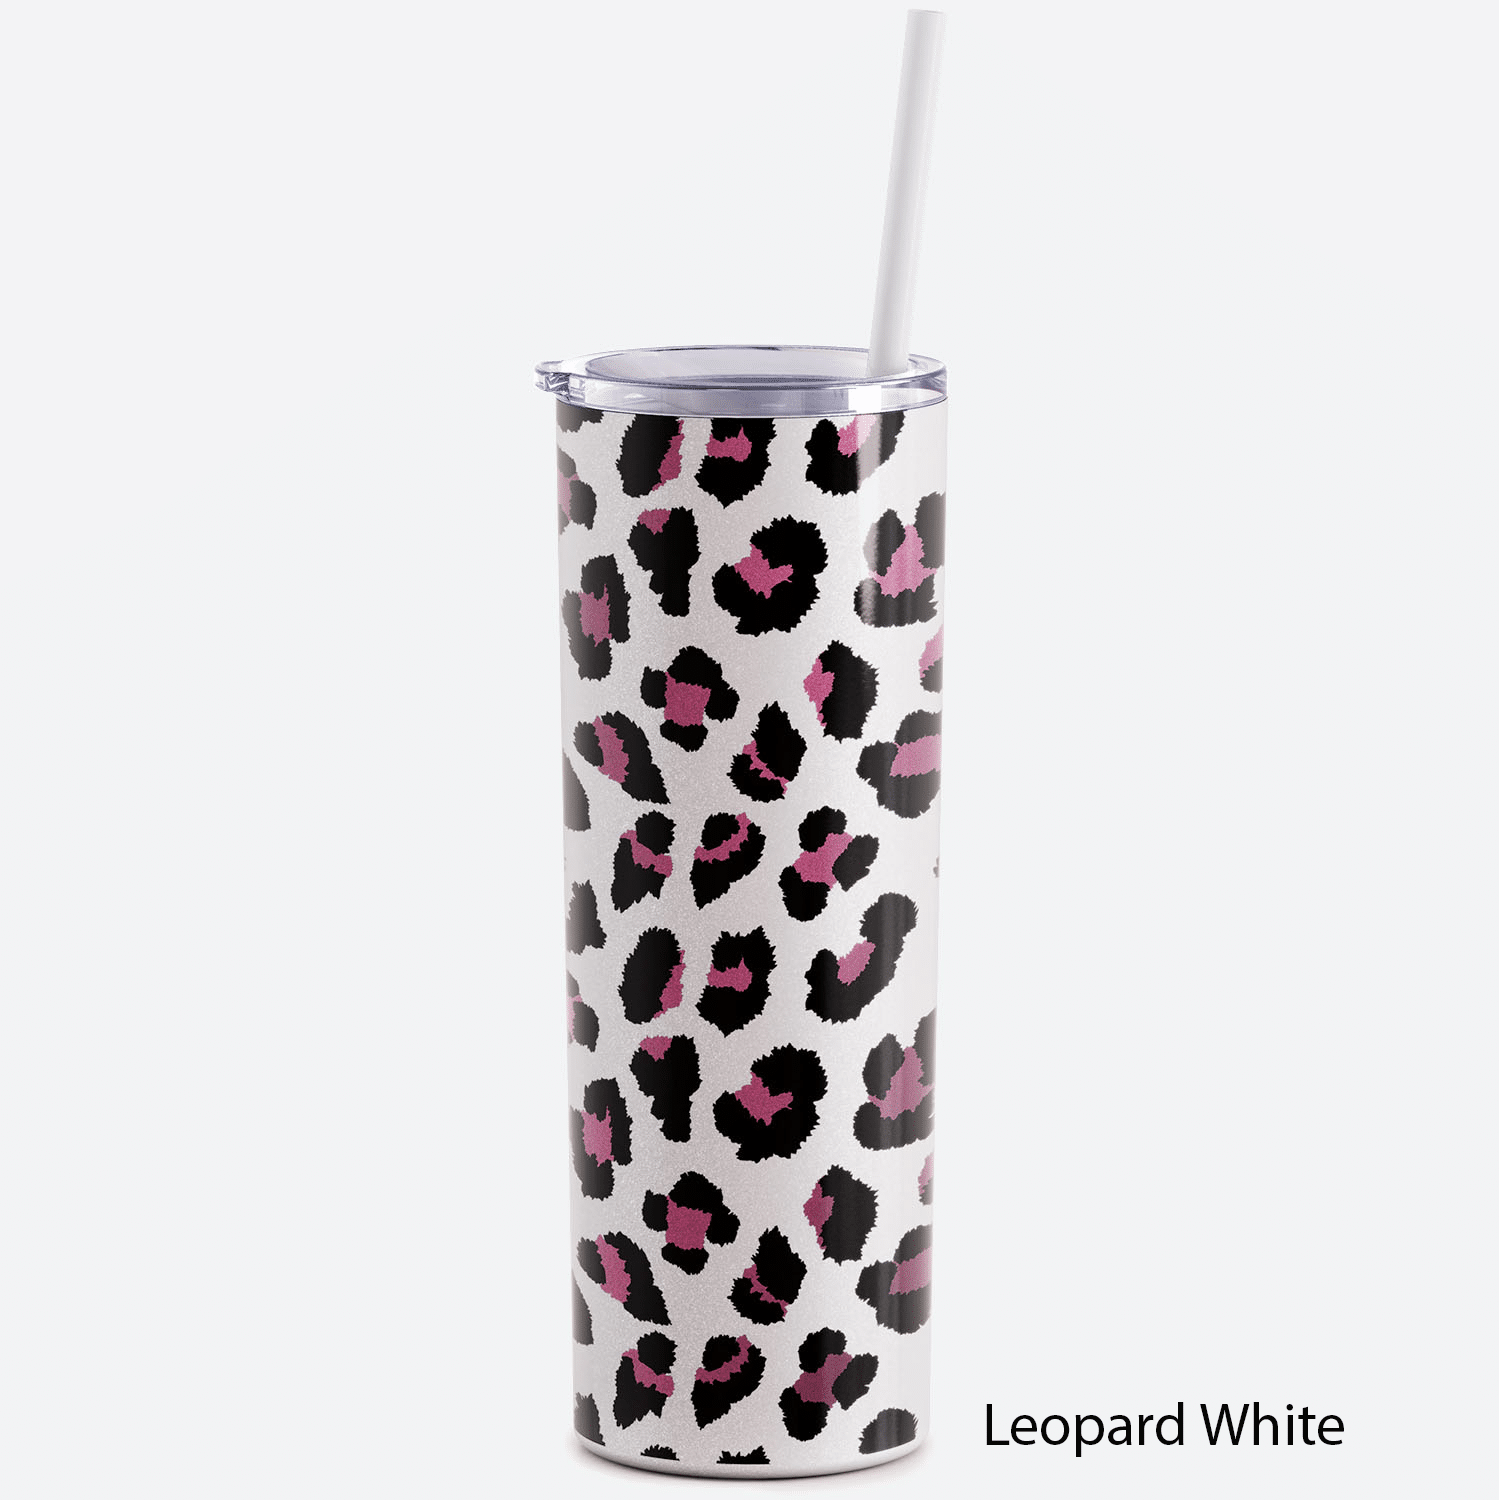 Leopard White